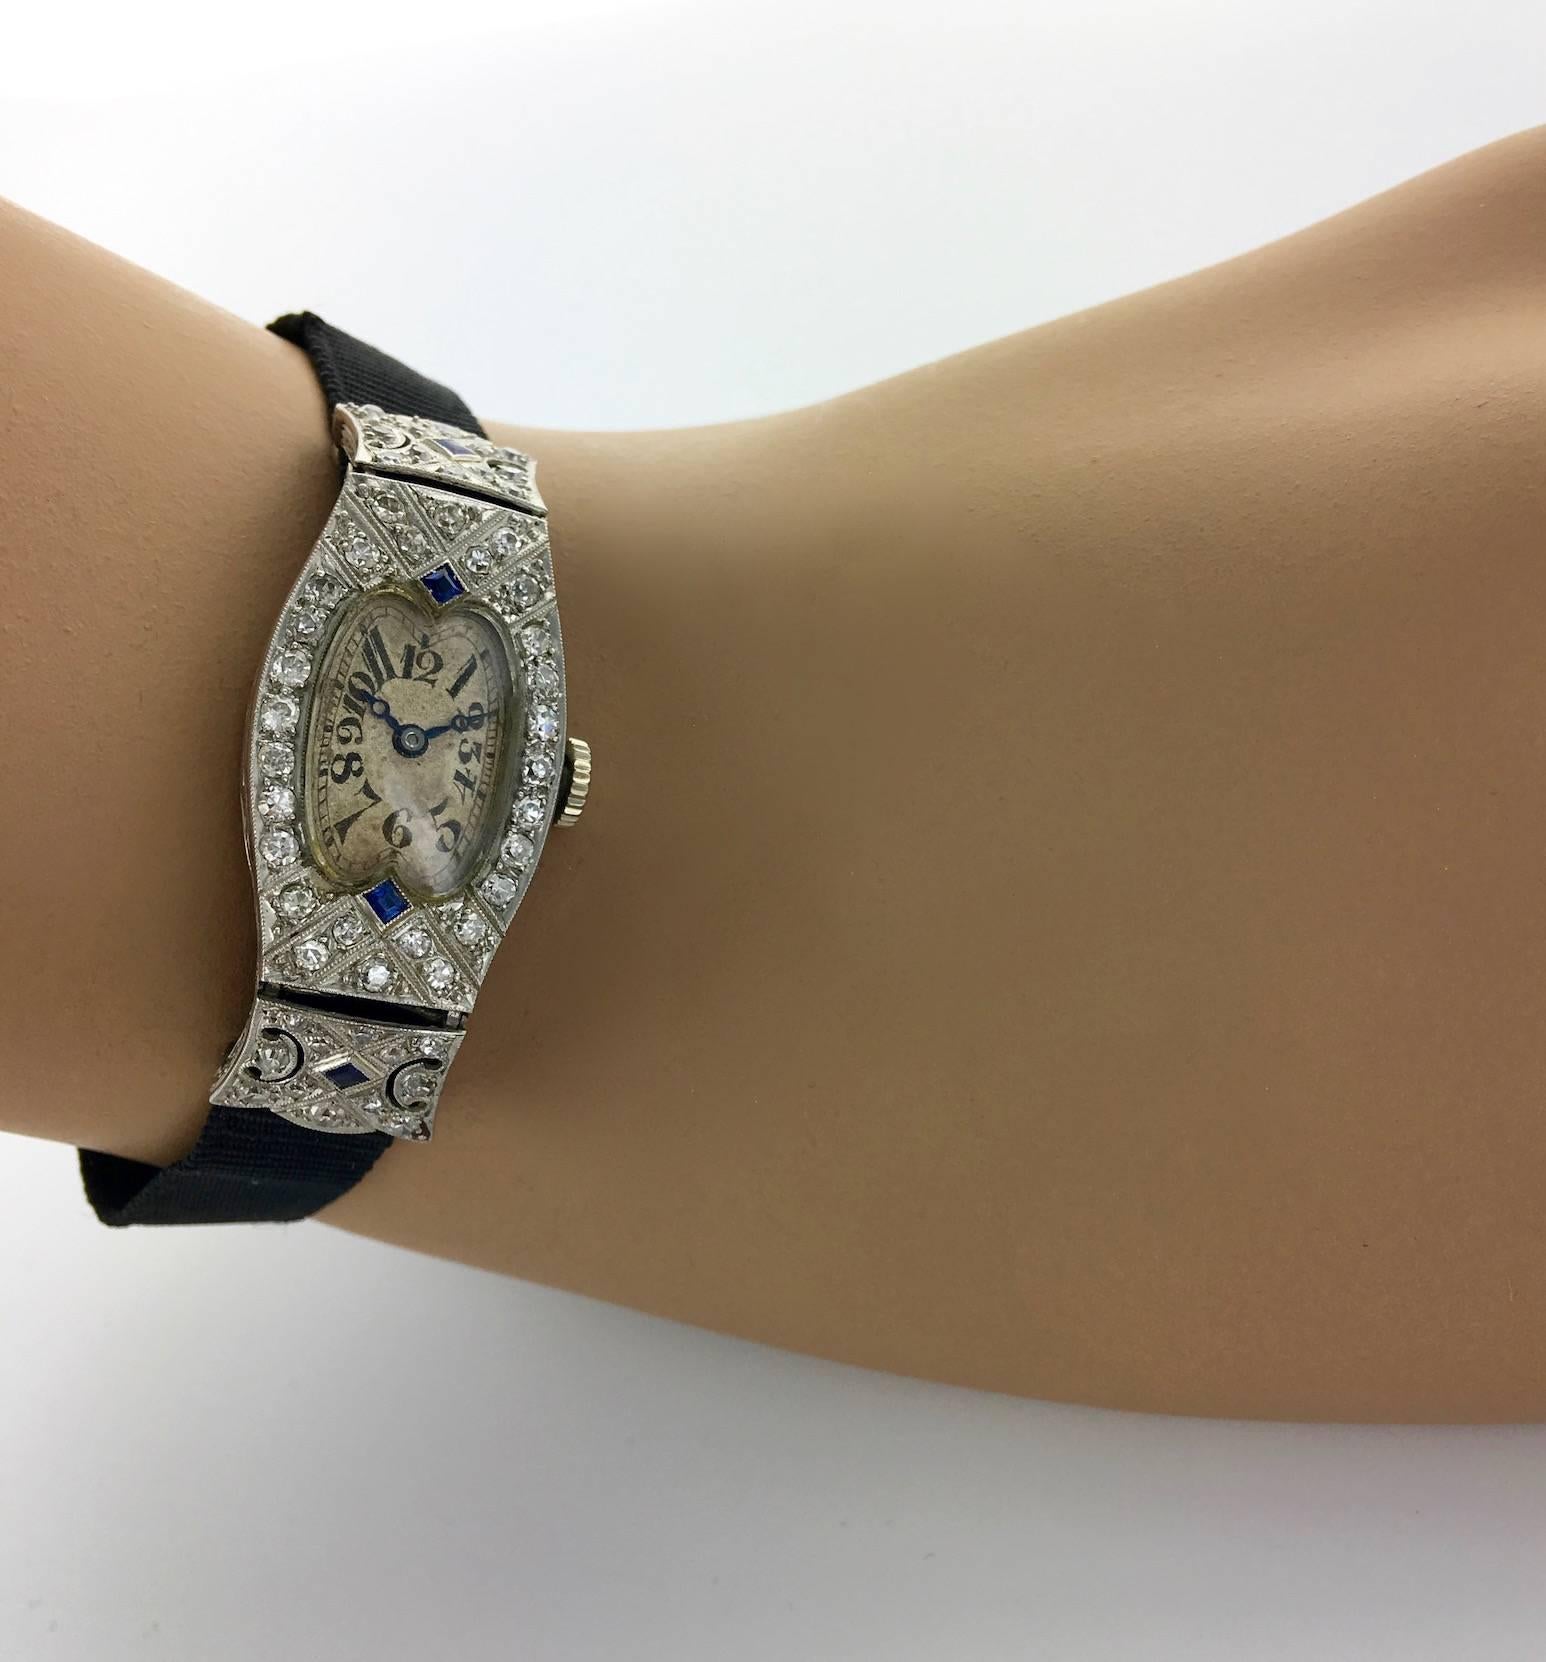 Art Deco Diamond and Sapphire Platinum wristwatch.
Glycine, 18 Rubies.
Made in SWITZERLAND. Circa 1920.
Black satin bracelet.